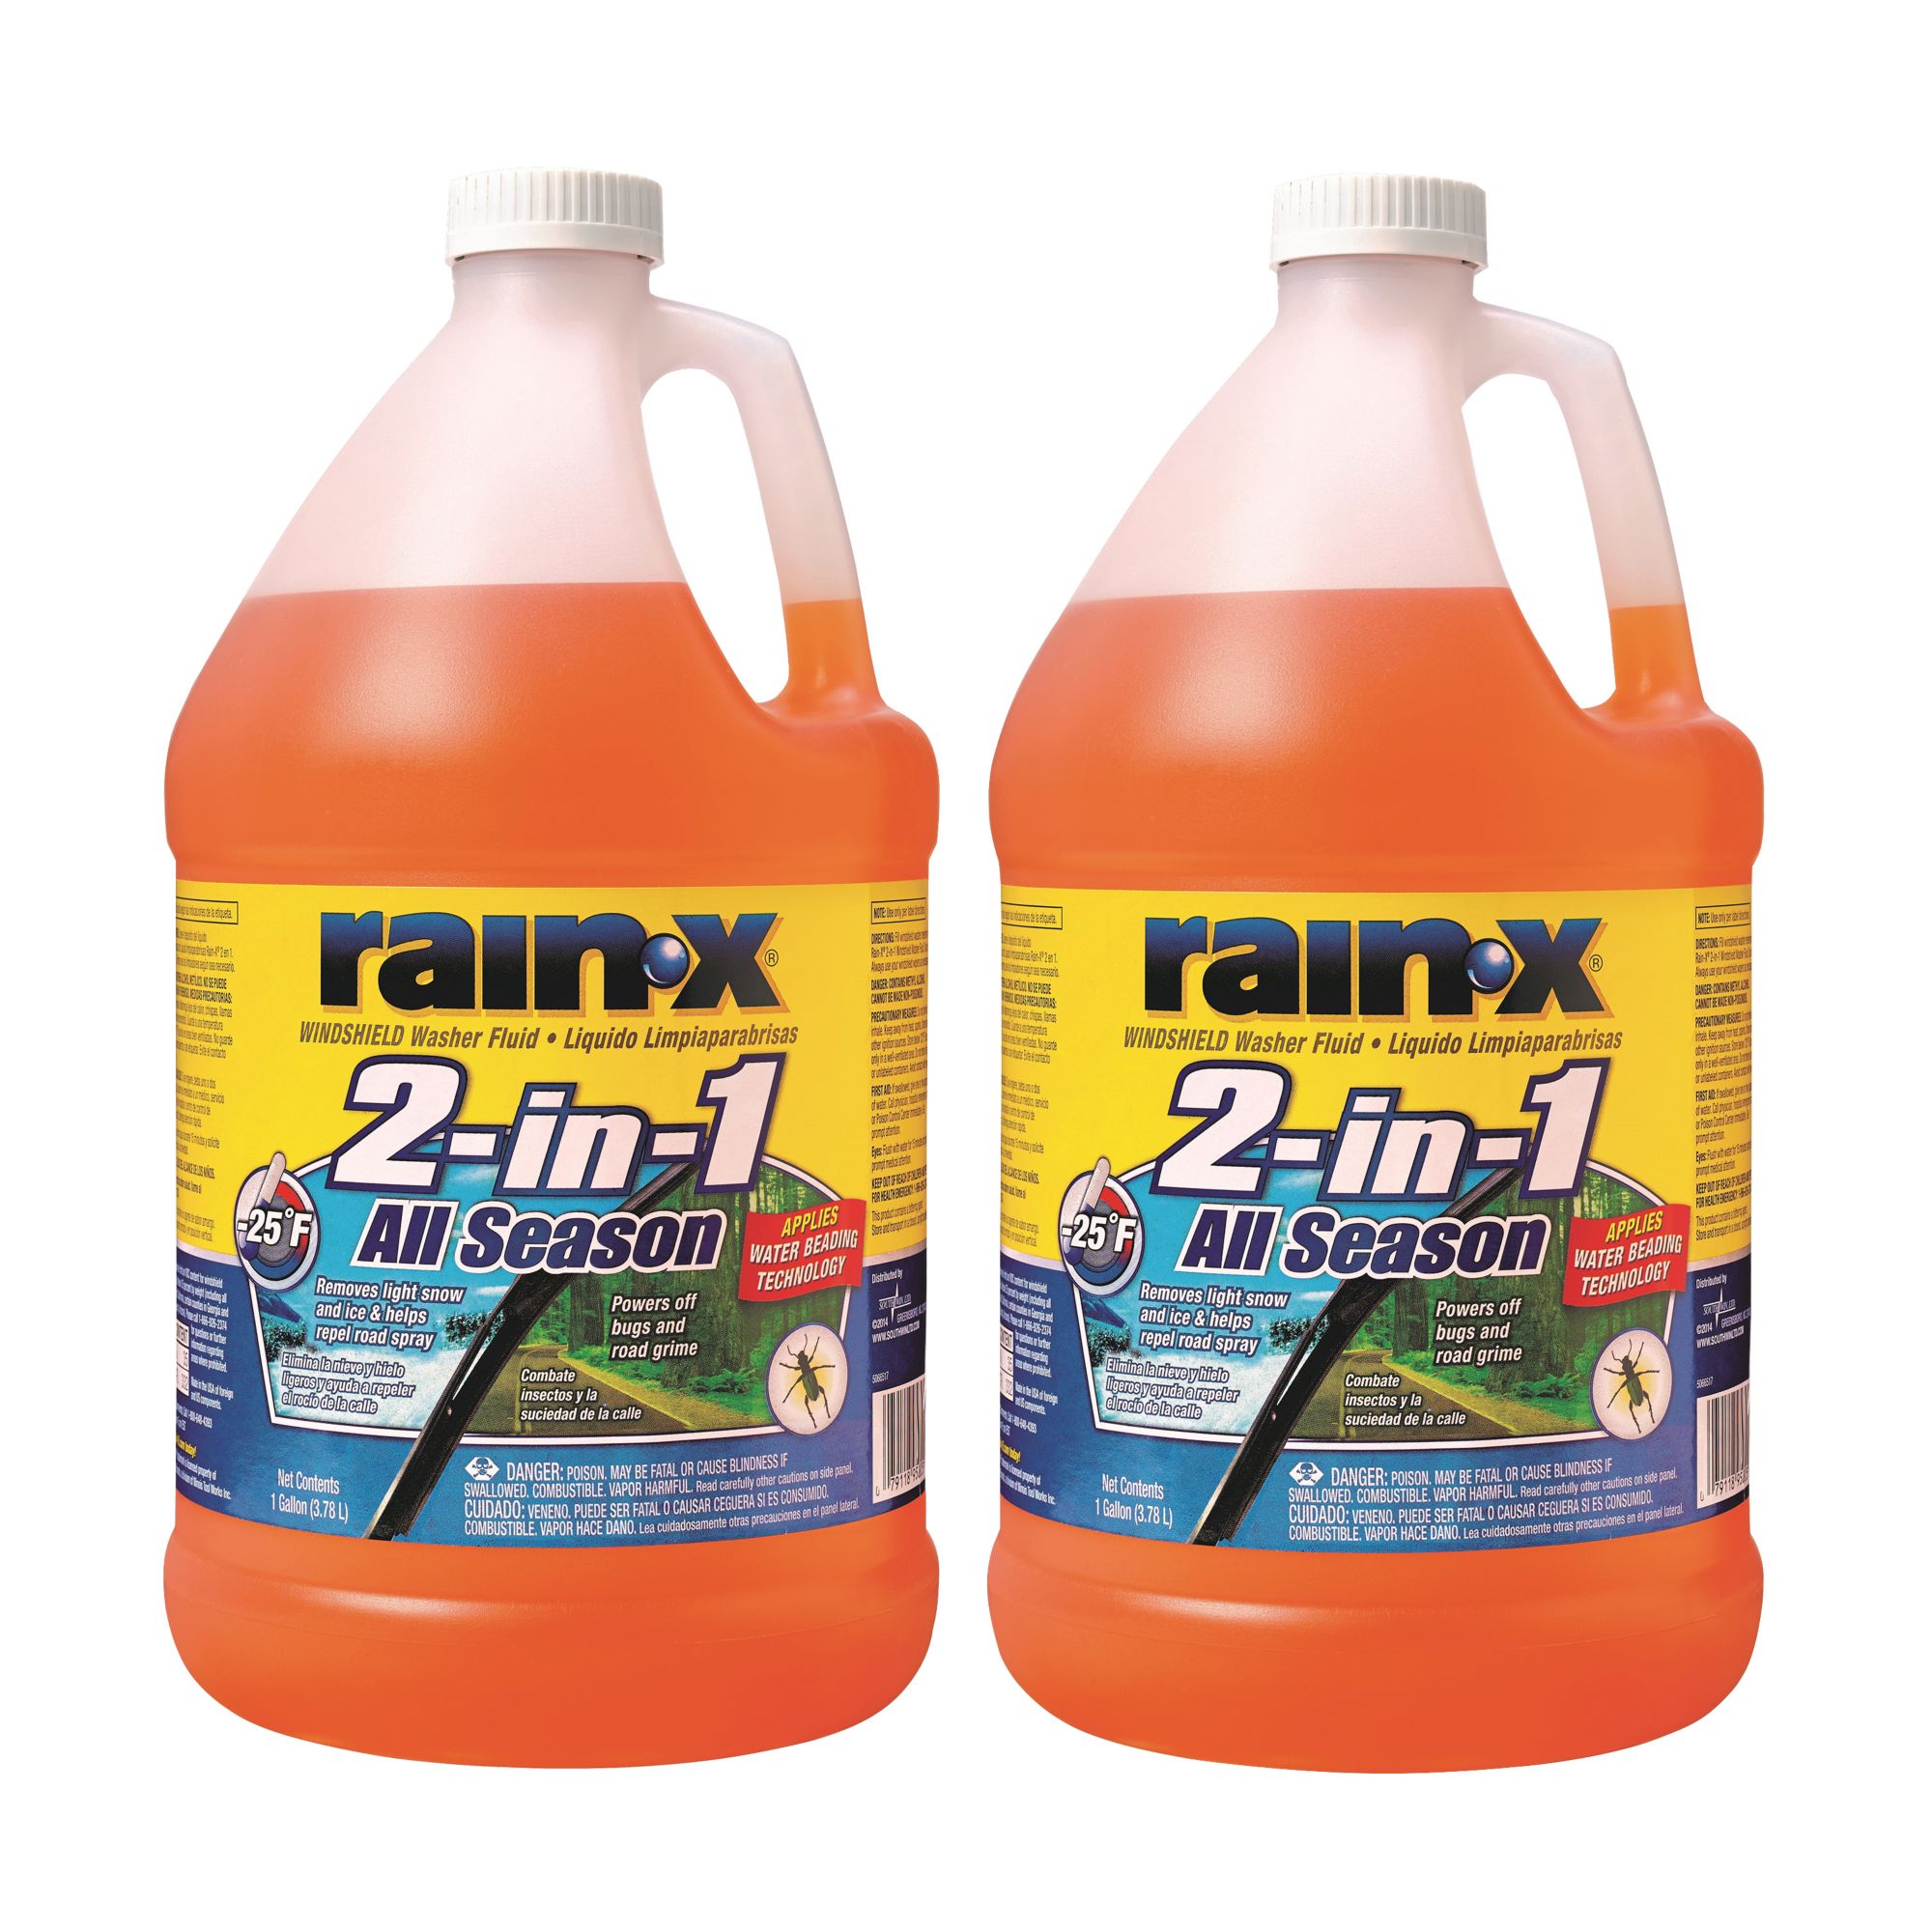 Rain-x 1gal +32 Degree Windshield Washer Fluid : Target